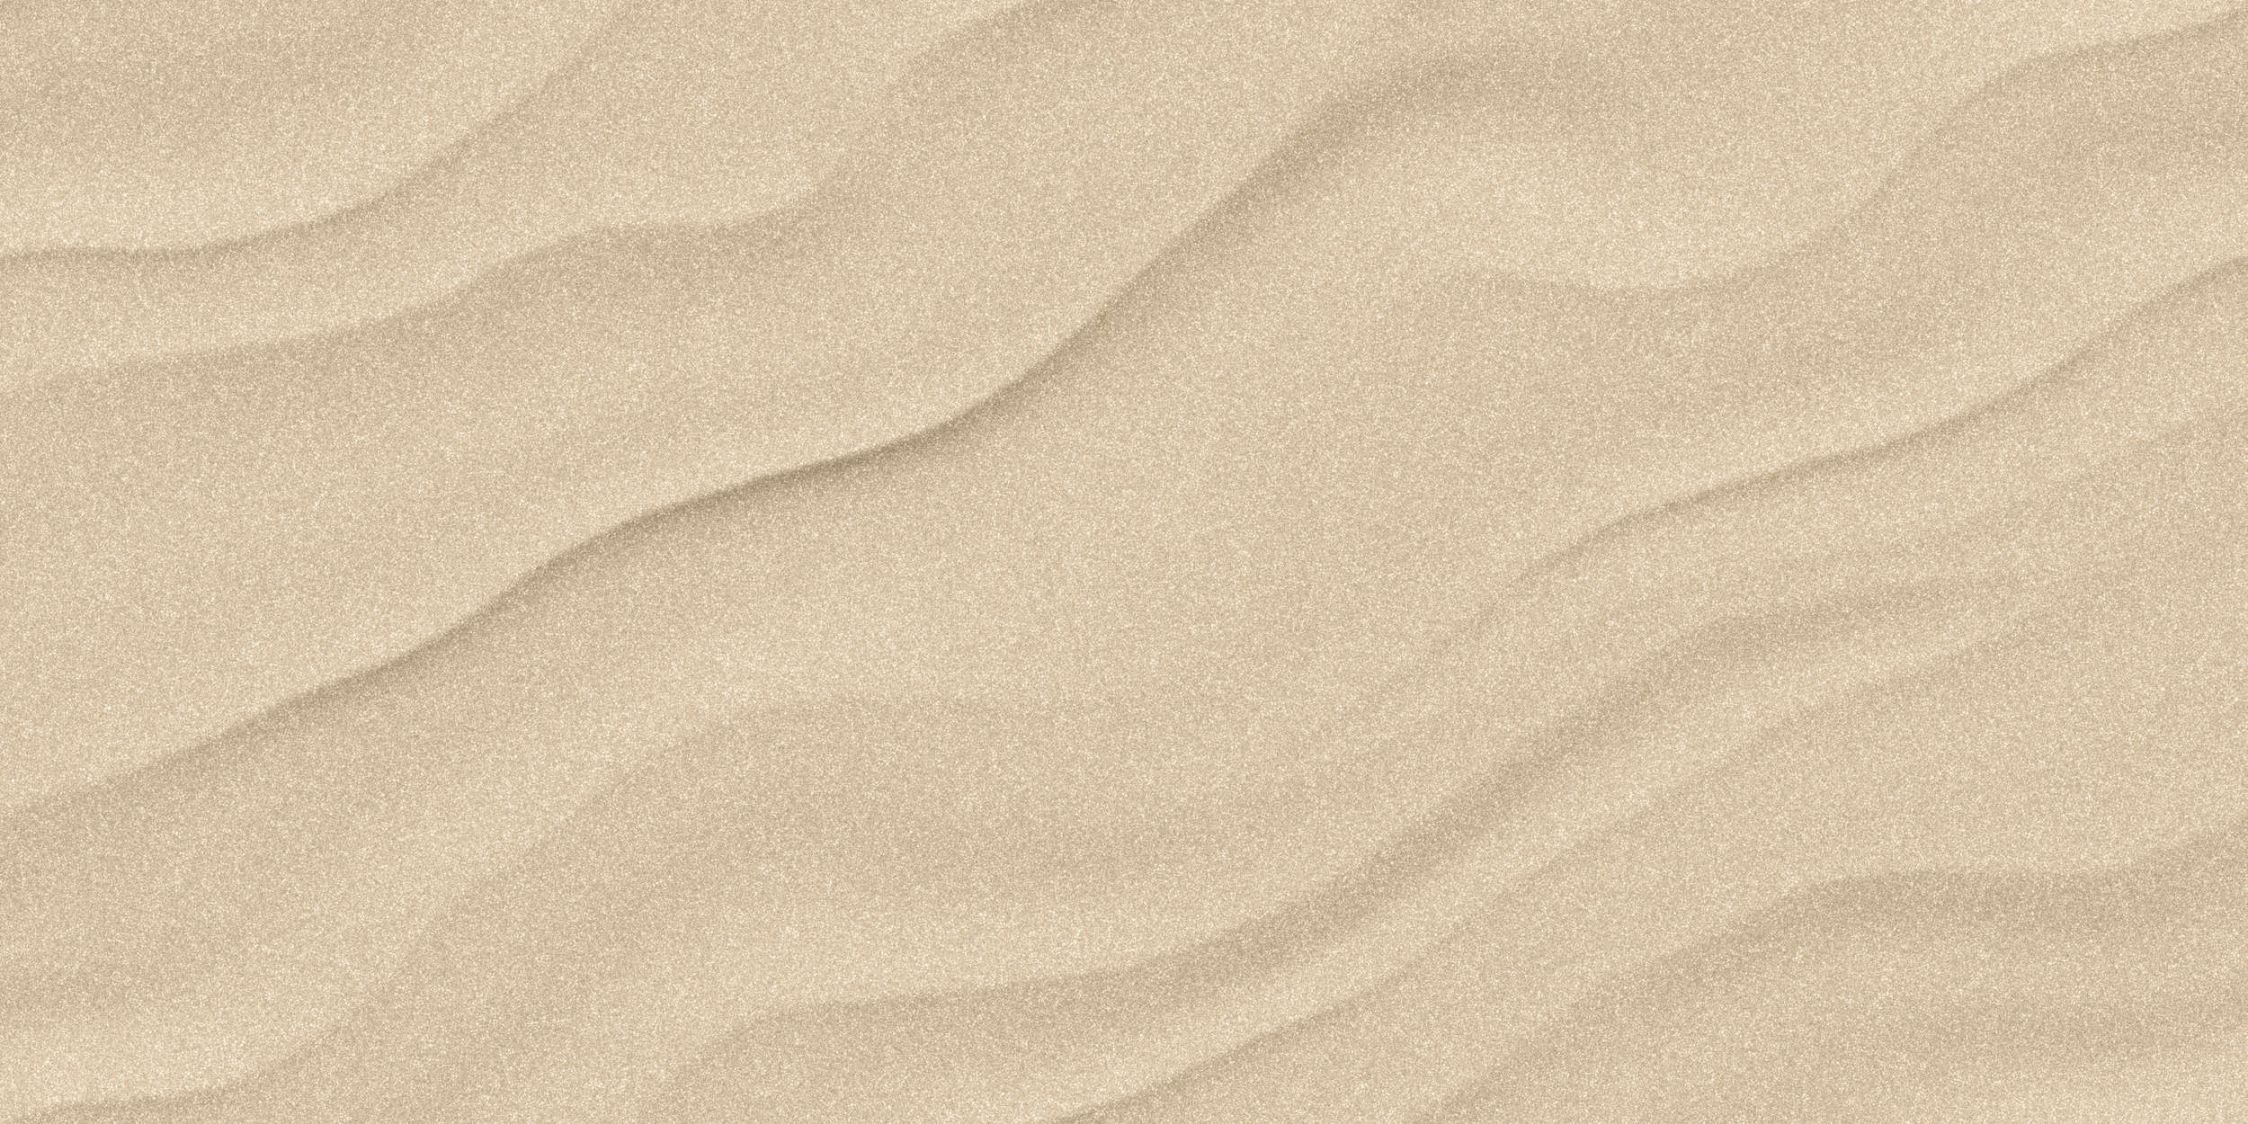             Fototapete »sahara« - Sandiger Wüstenboden mit Büttenpapier-Optik – Mattes, Glattes Vlies
        